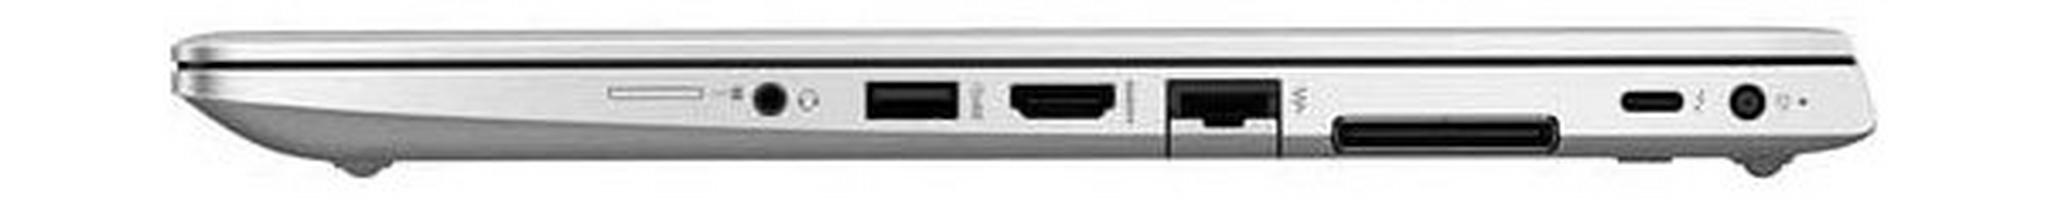 HP EliteBook 840 Core i5 8GB RAM 256GB SSD 14" SMB Laptop (8MJ75EA#ABV) - Silver